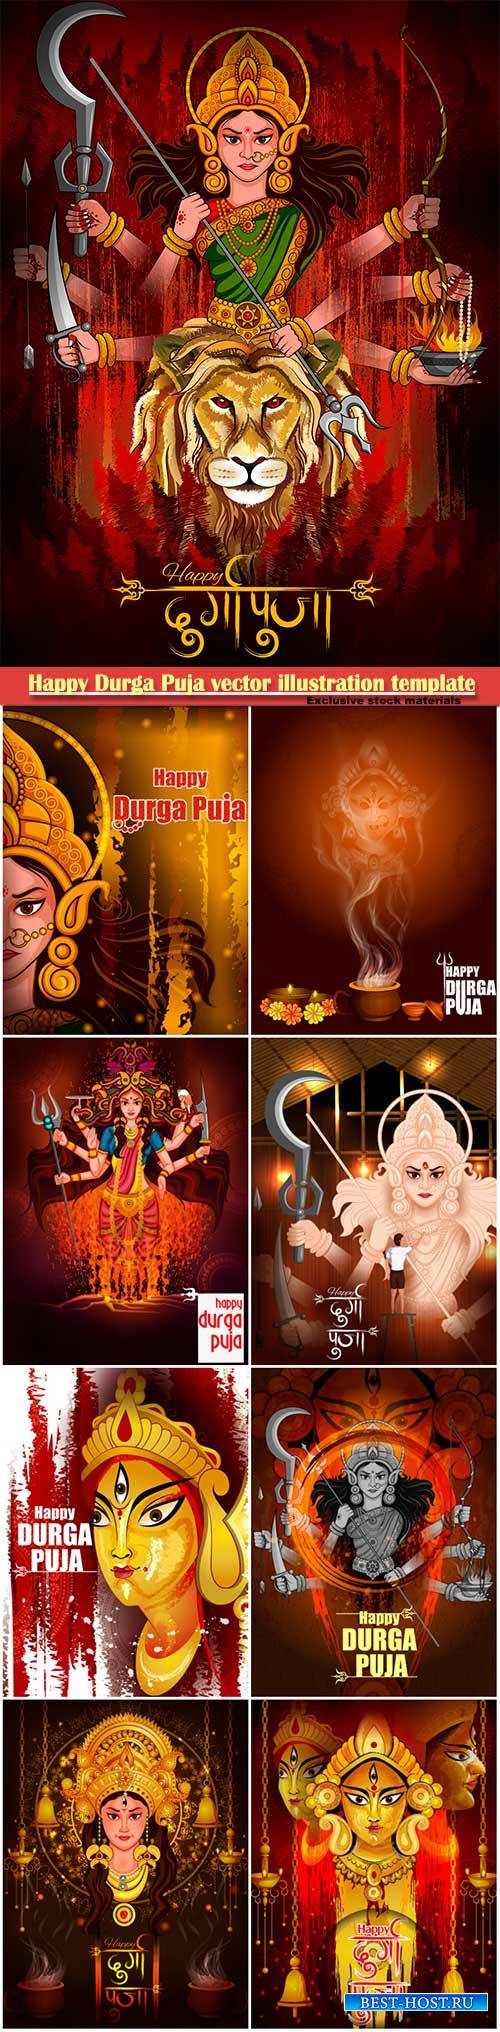 Happy Durga Puja vector illustration template